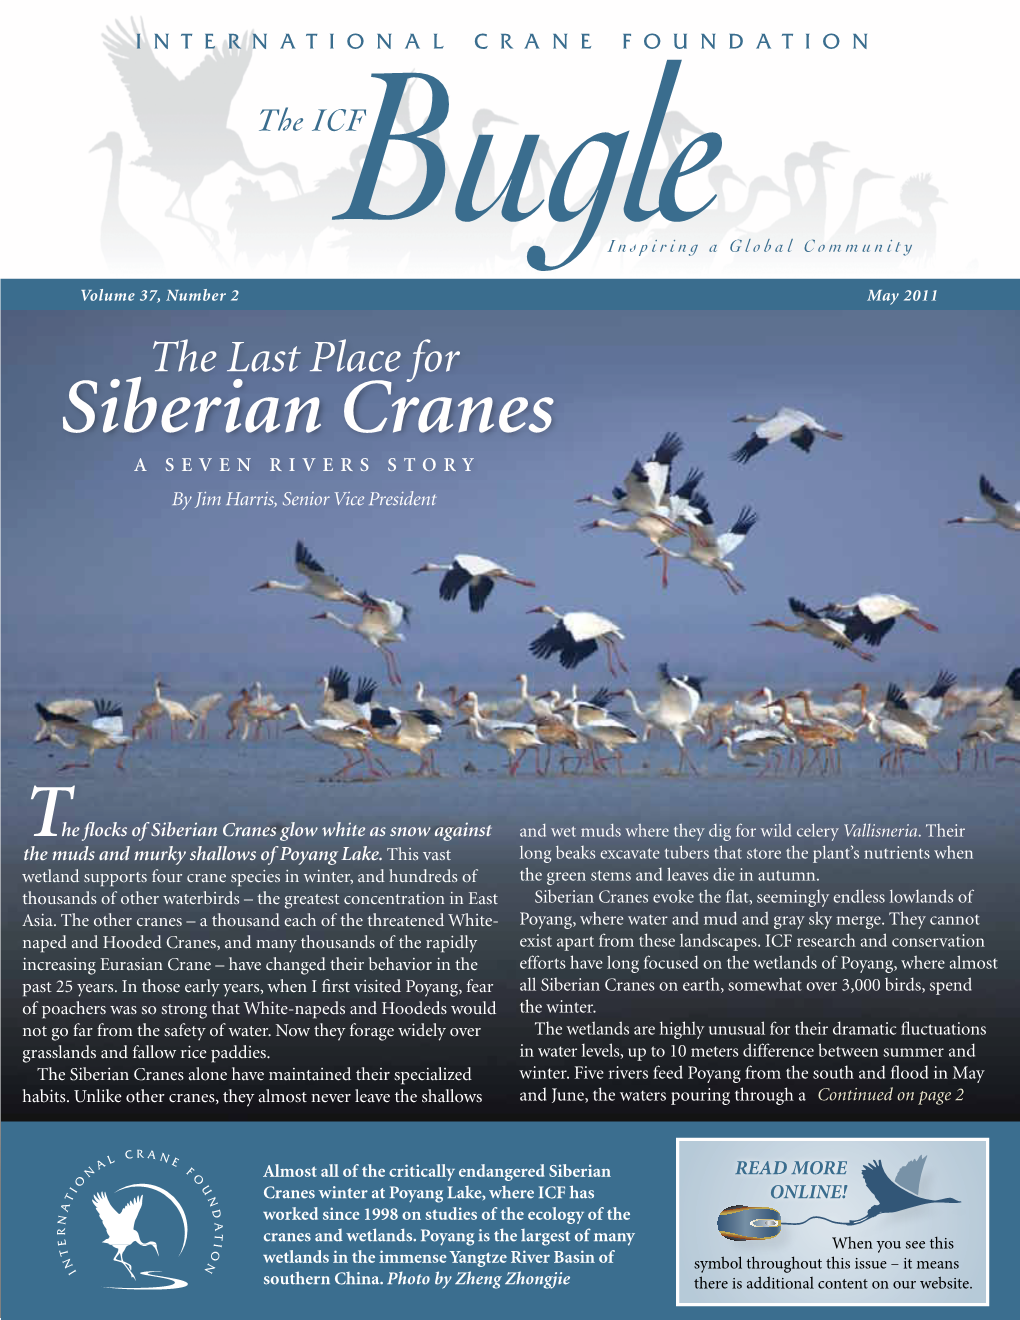 Siberian Cranes a SEVEN RIVERS STORY by Jim Harris, Senior Vice President